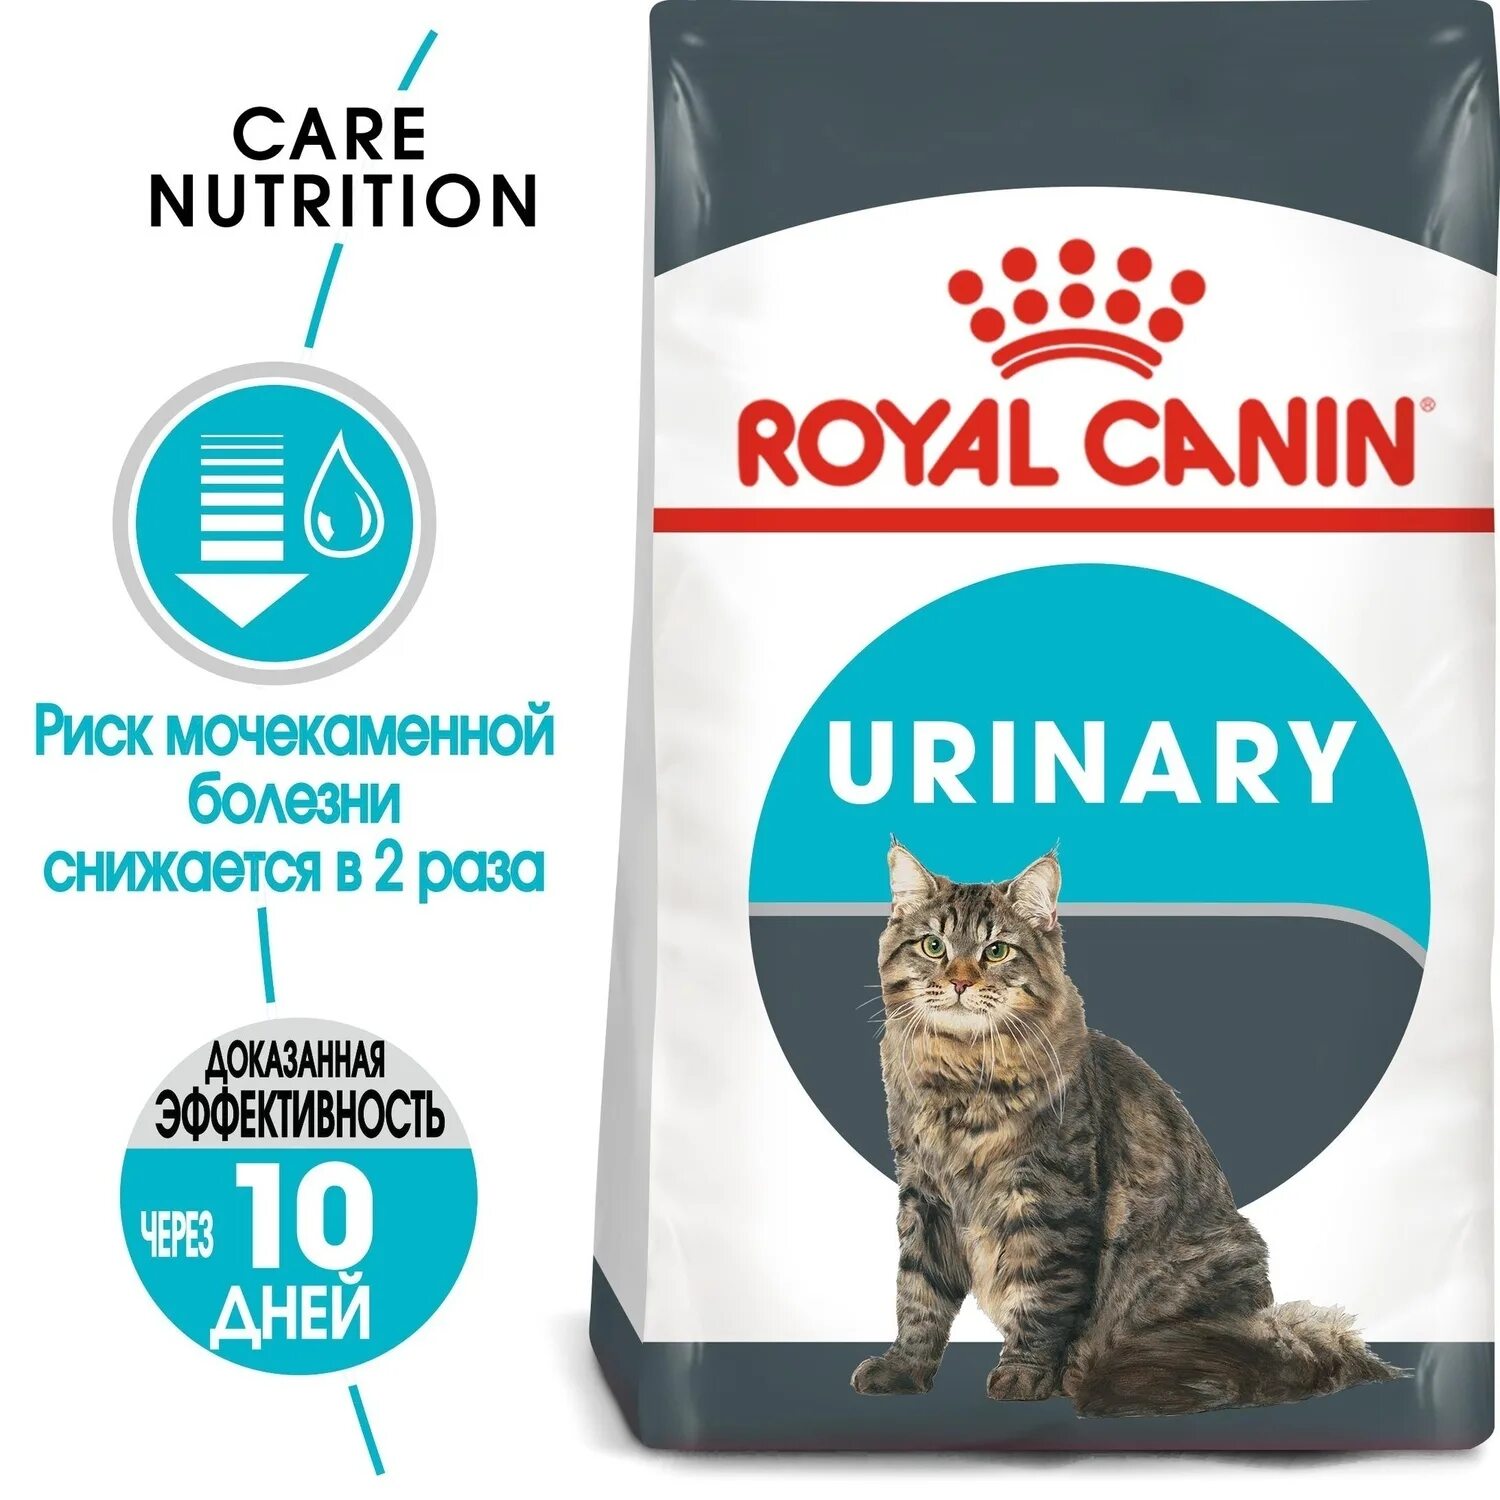 Royal canin urinary для кошек купить. Роял Канин Digestive Care для кошек. Корм Роял Канин для кошек Urinary. Royal Canin Urinary для кошек. Роял Канин Уринари Care для кошек.